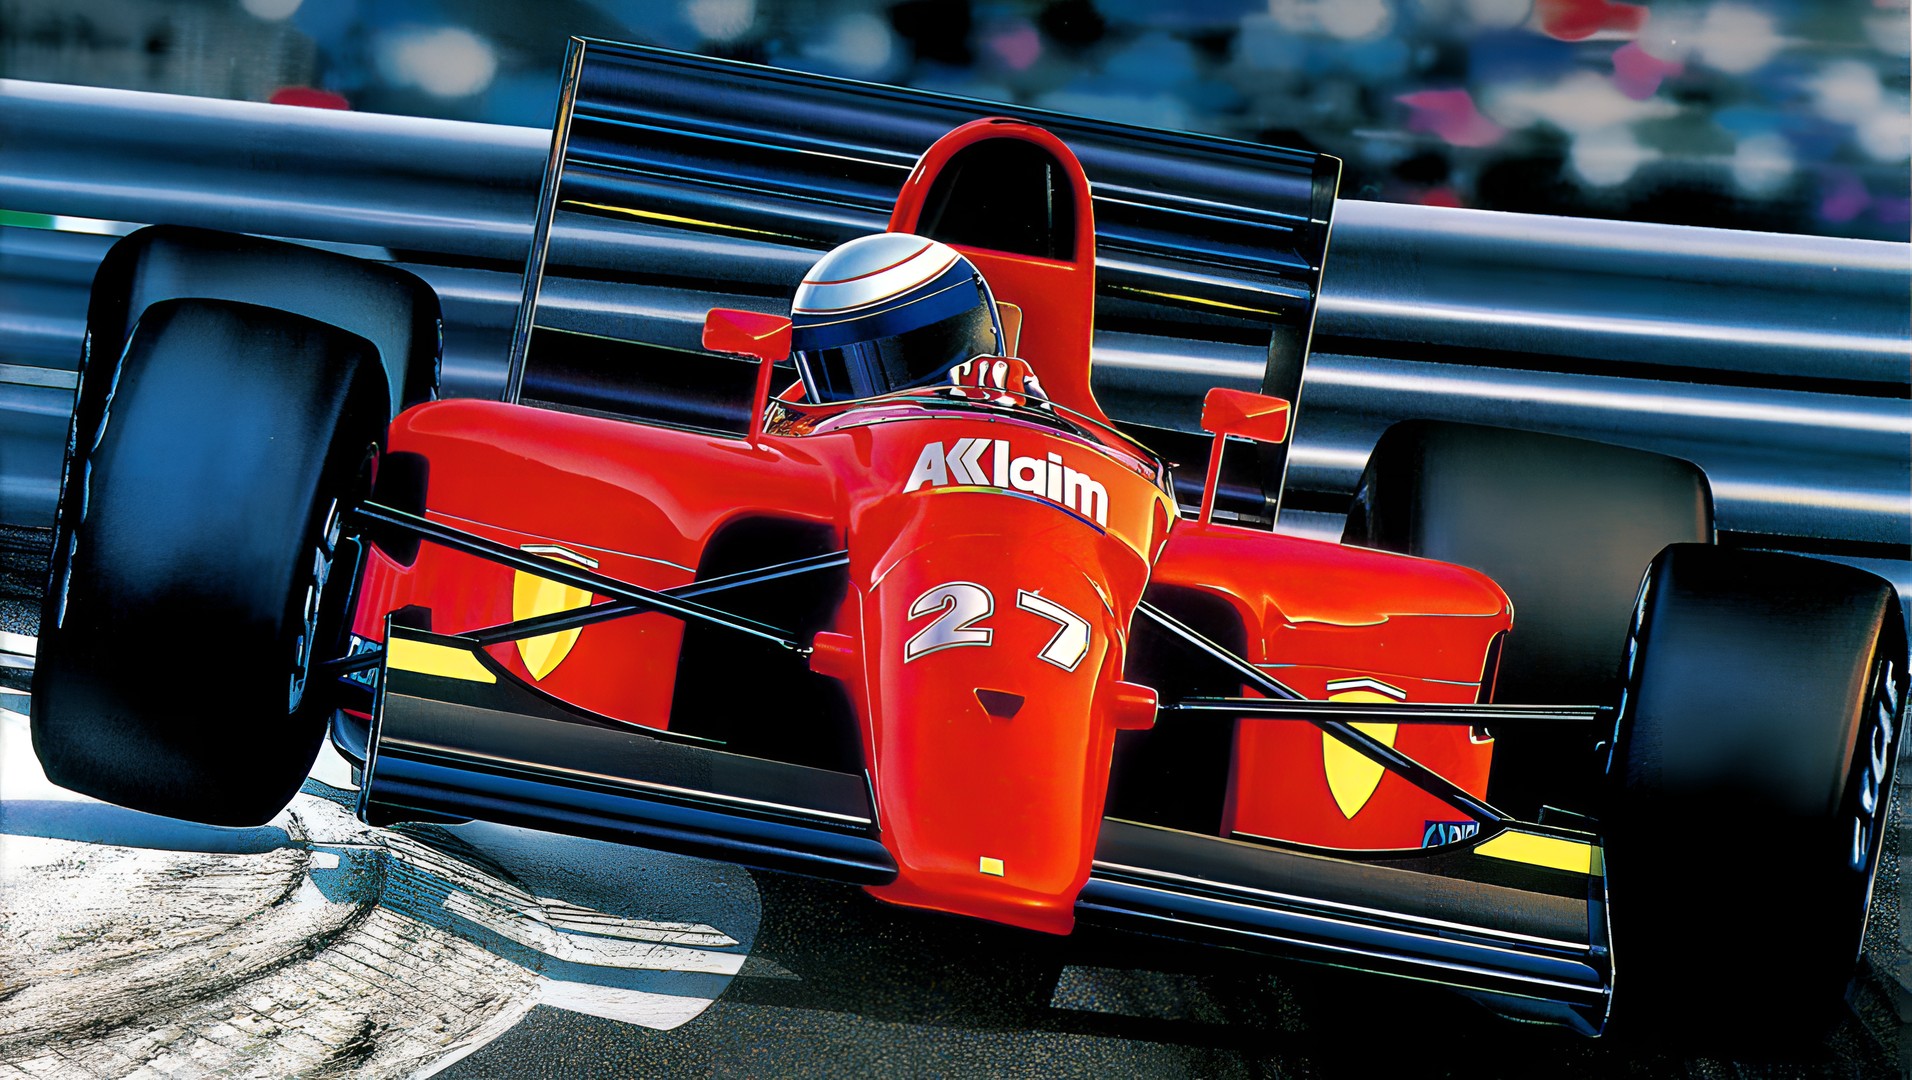 Ferrari Grand Prix Challenge